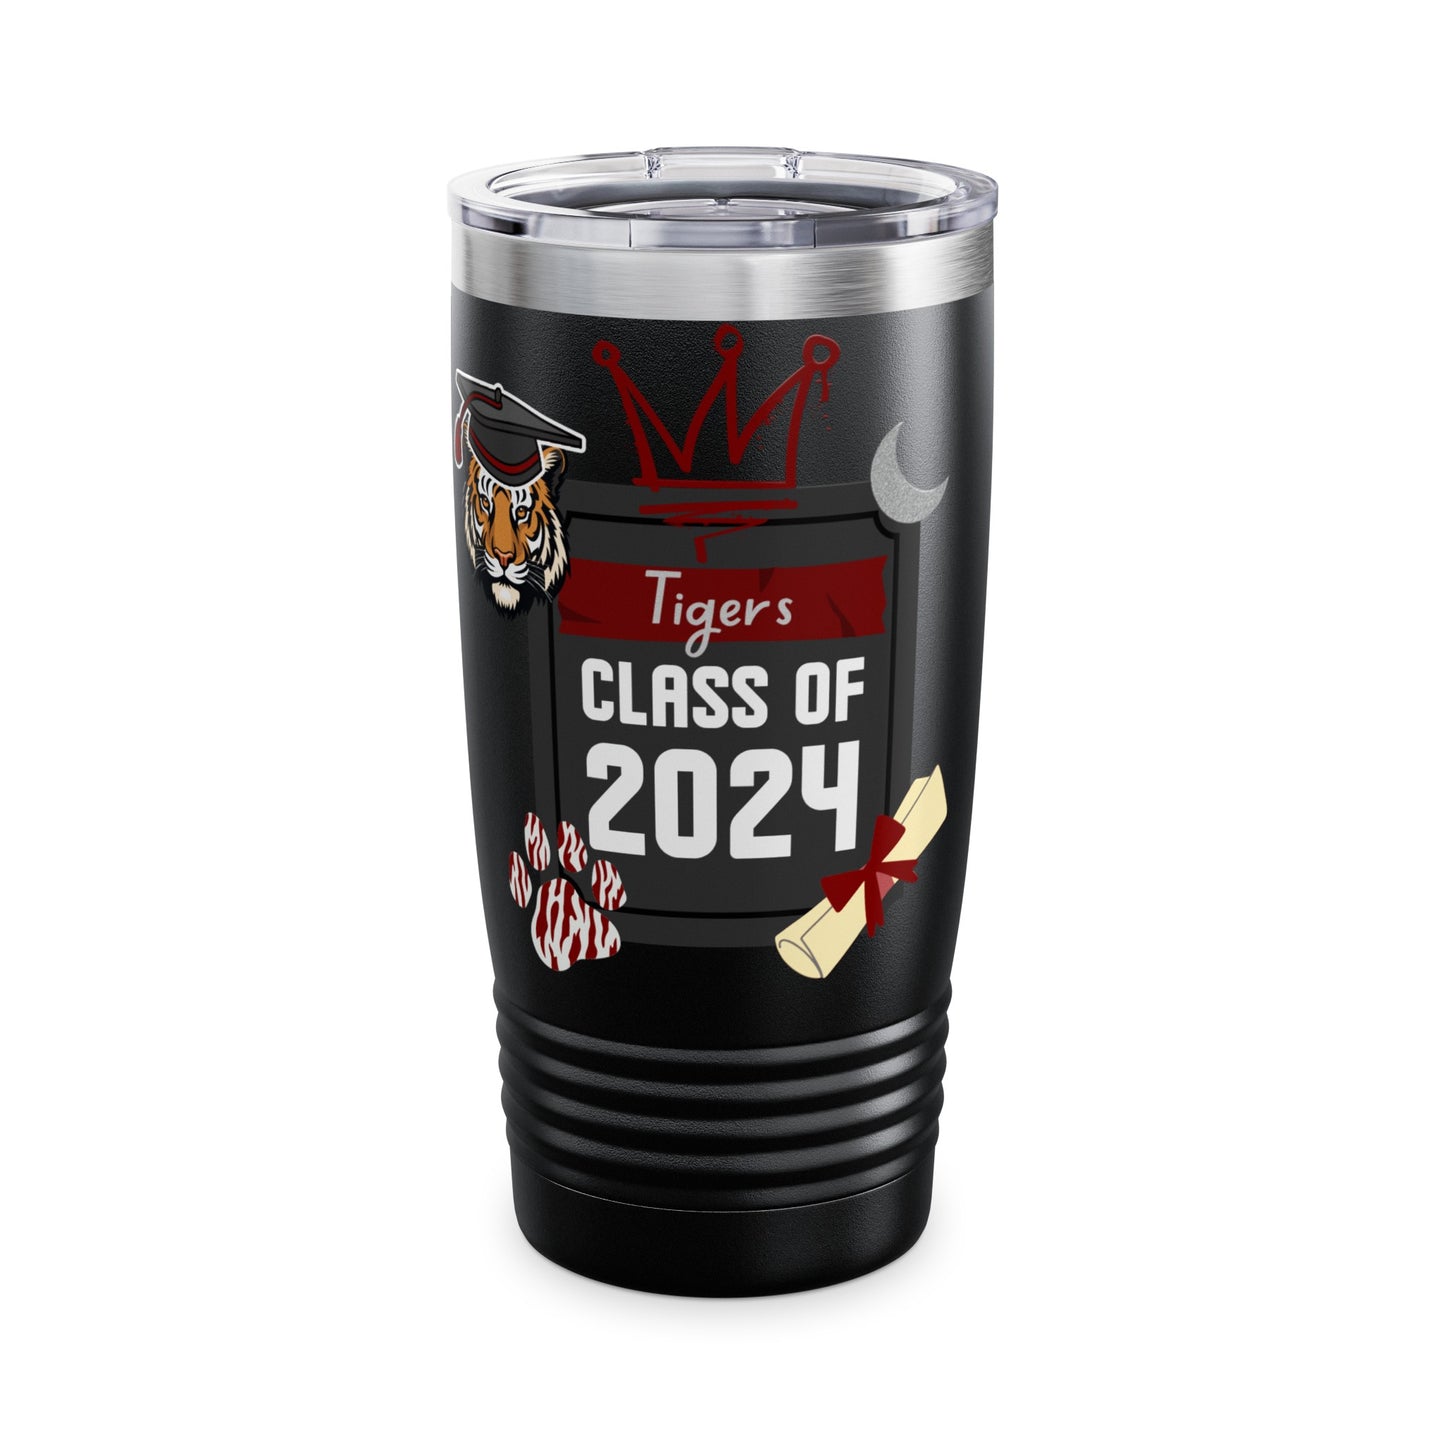 Tigers Class of 2024 Tumbler, 20oz